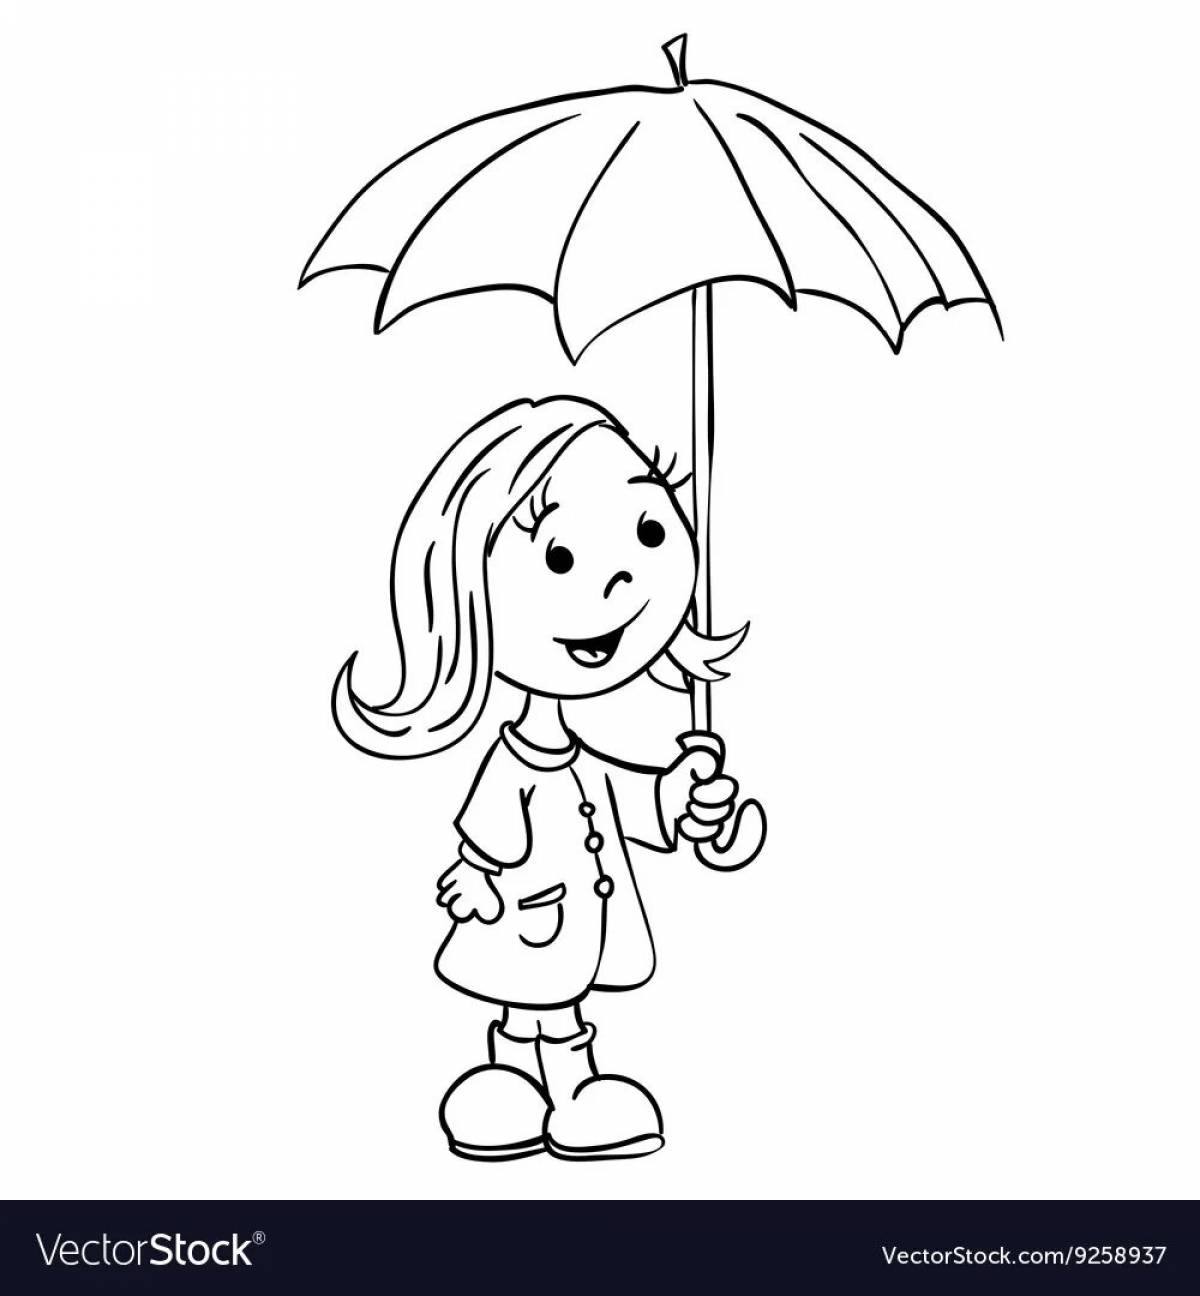 Girl with umbrella #4